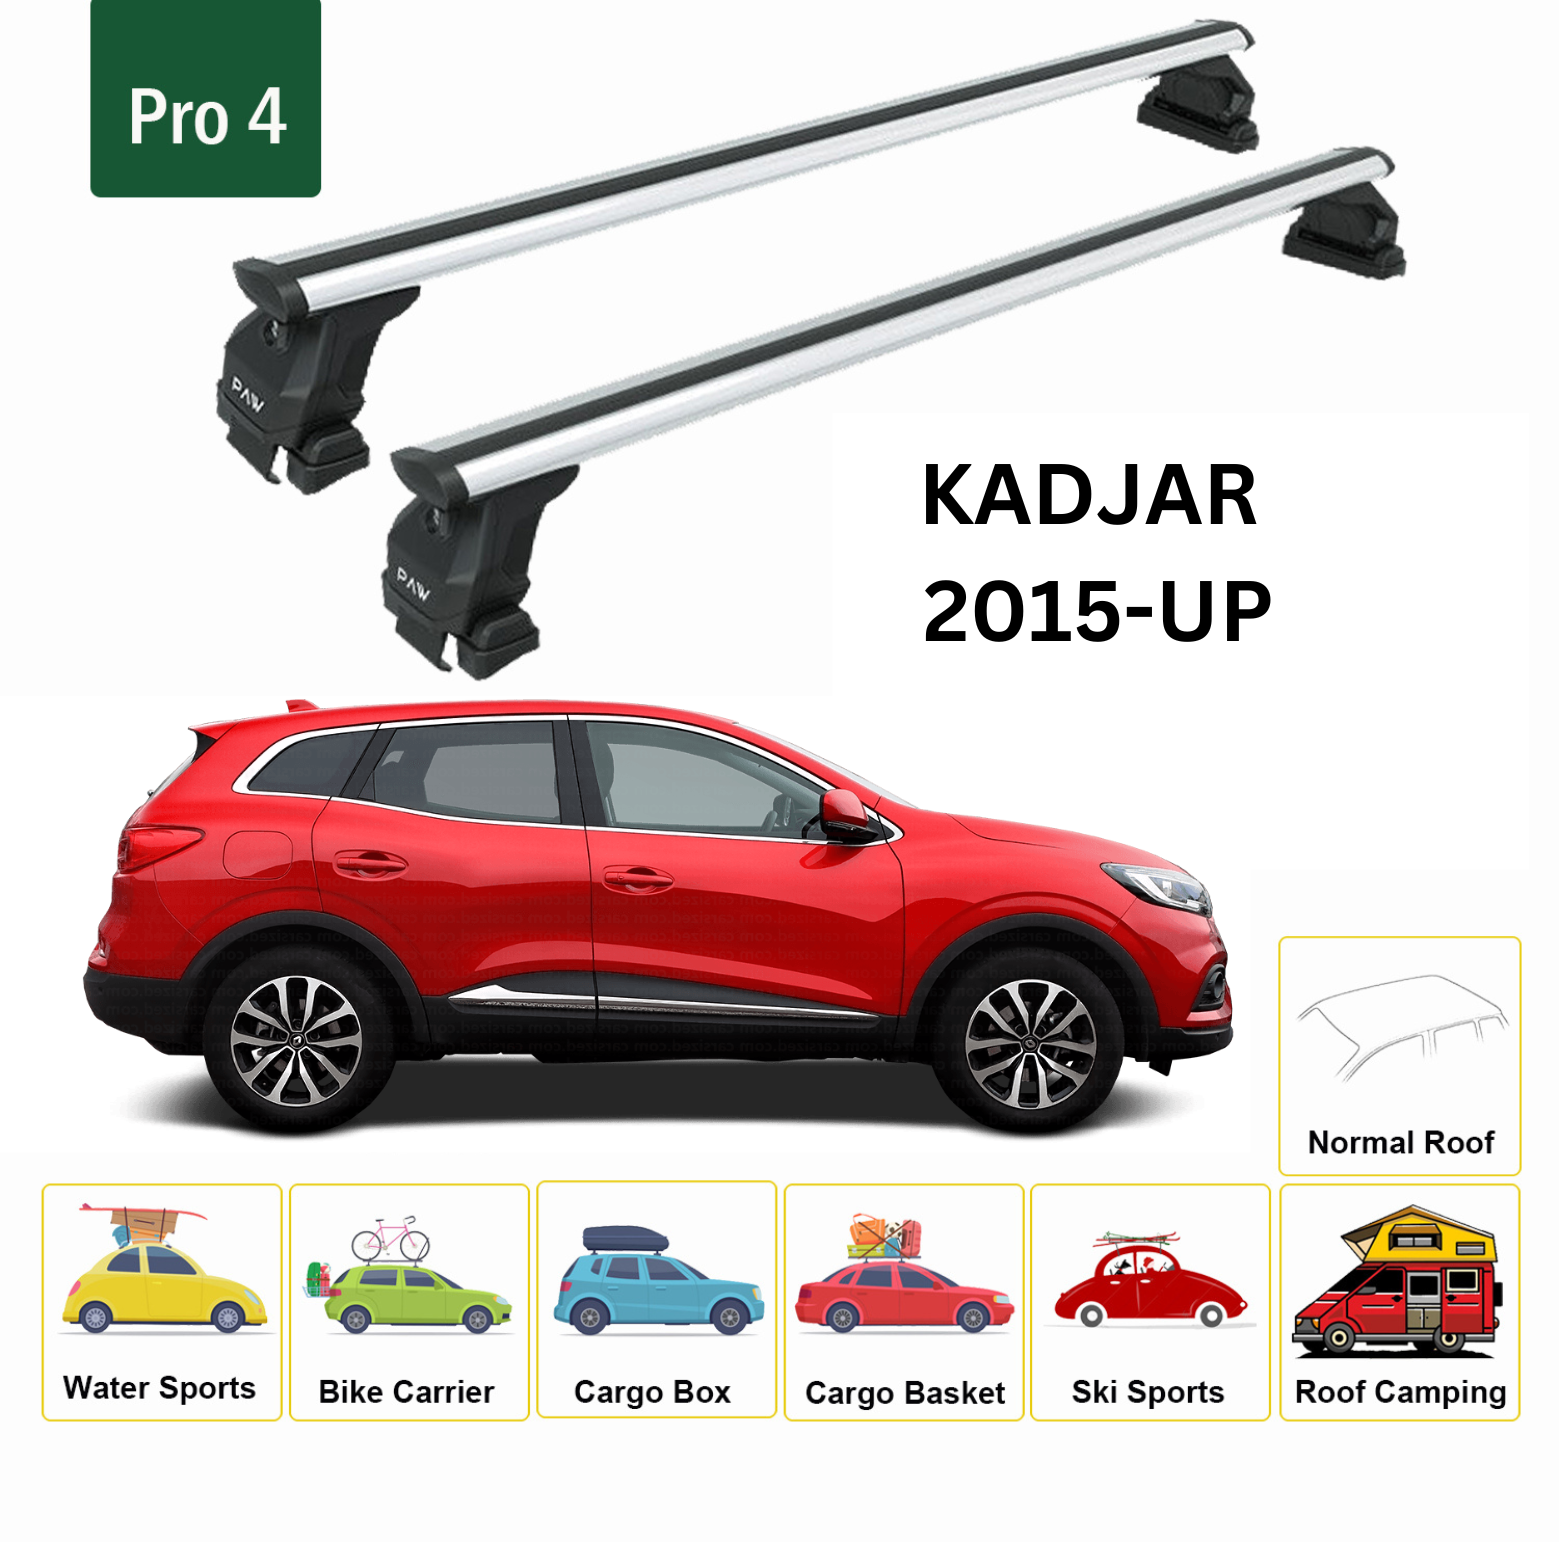 For Renault Kadjar 2015-Up Roof Rack System, Aluminium Cross Bar, Metal Bracket, Normal Roof, Silver - 0